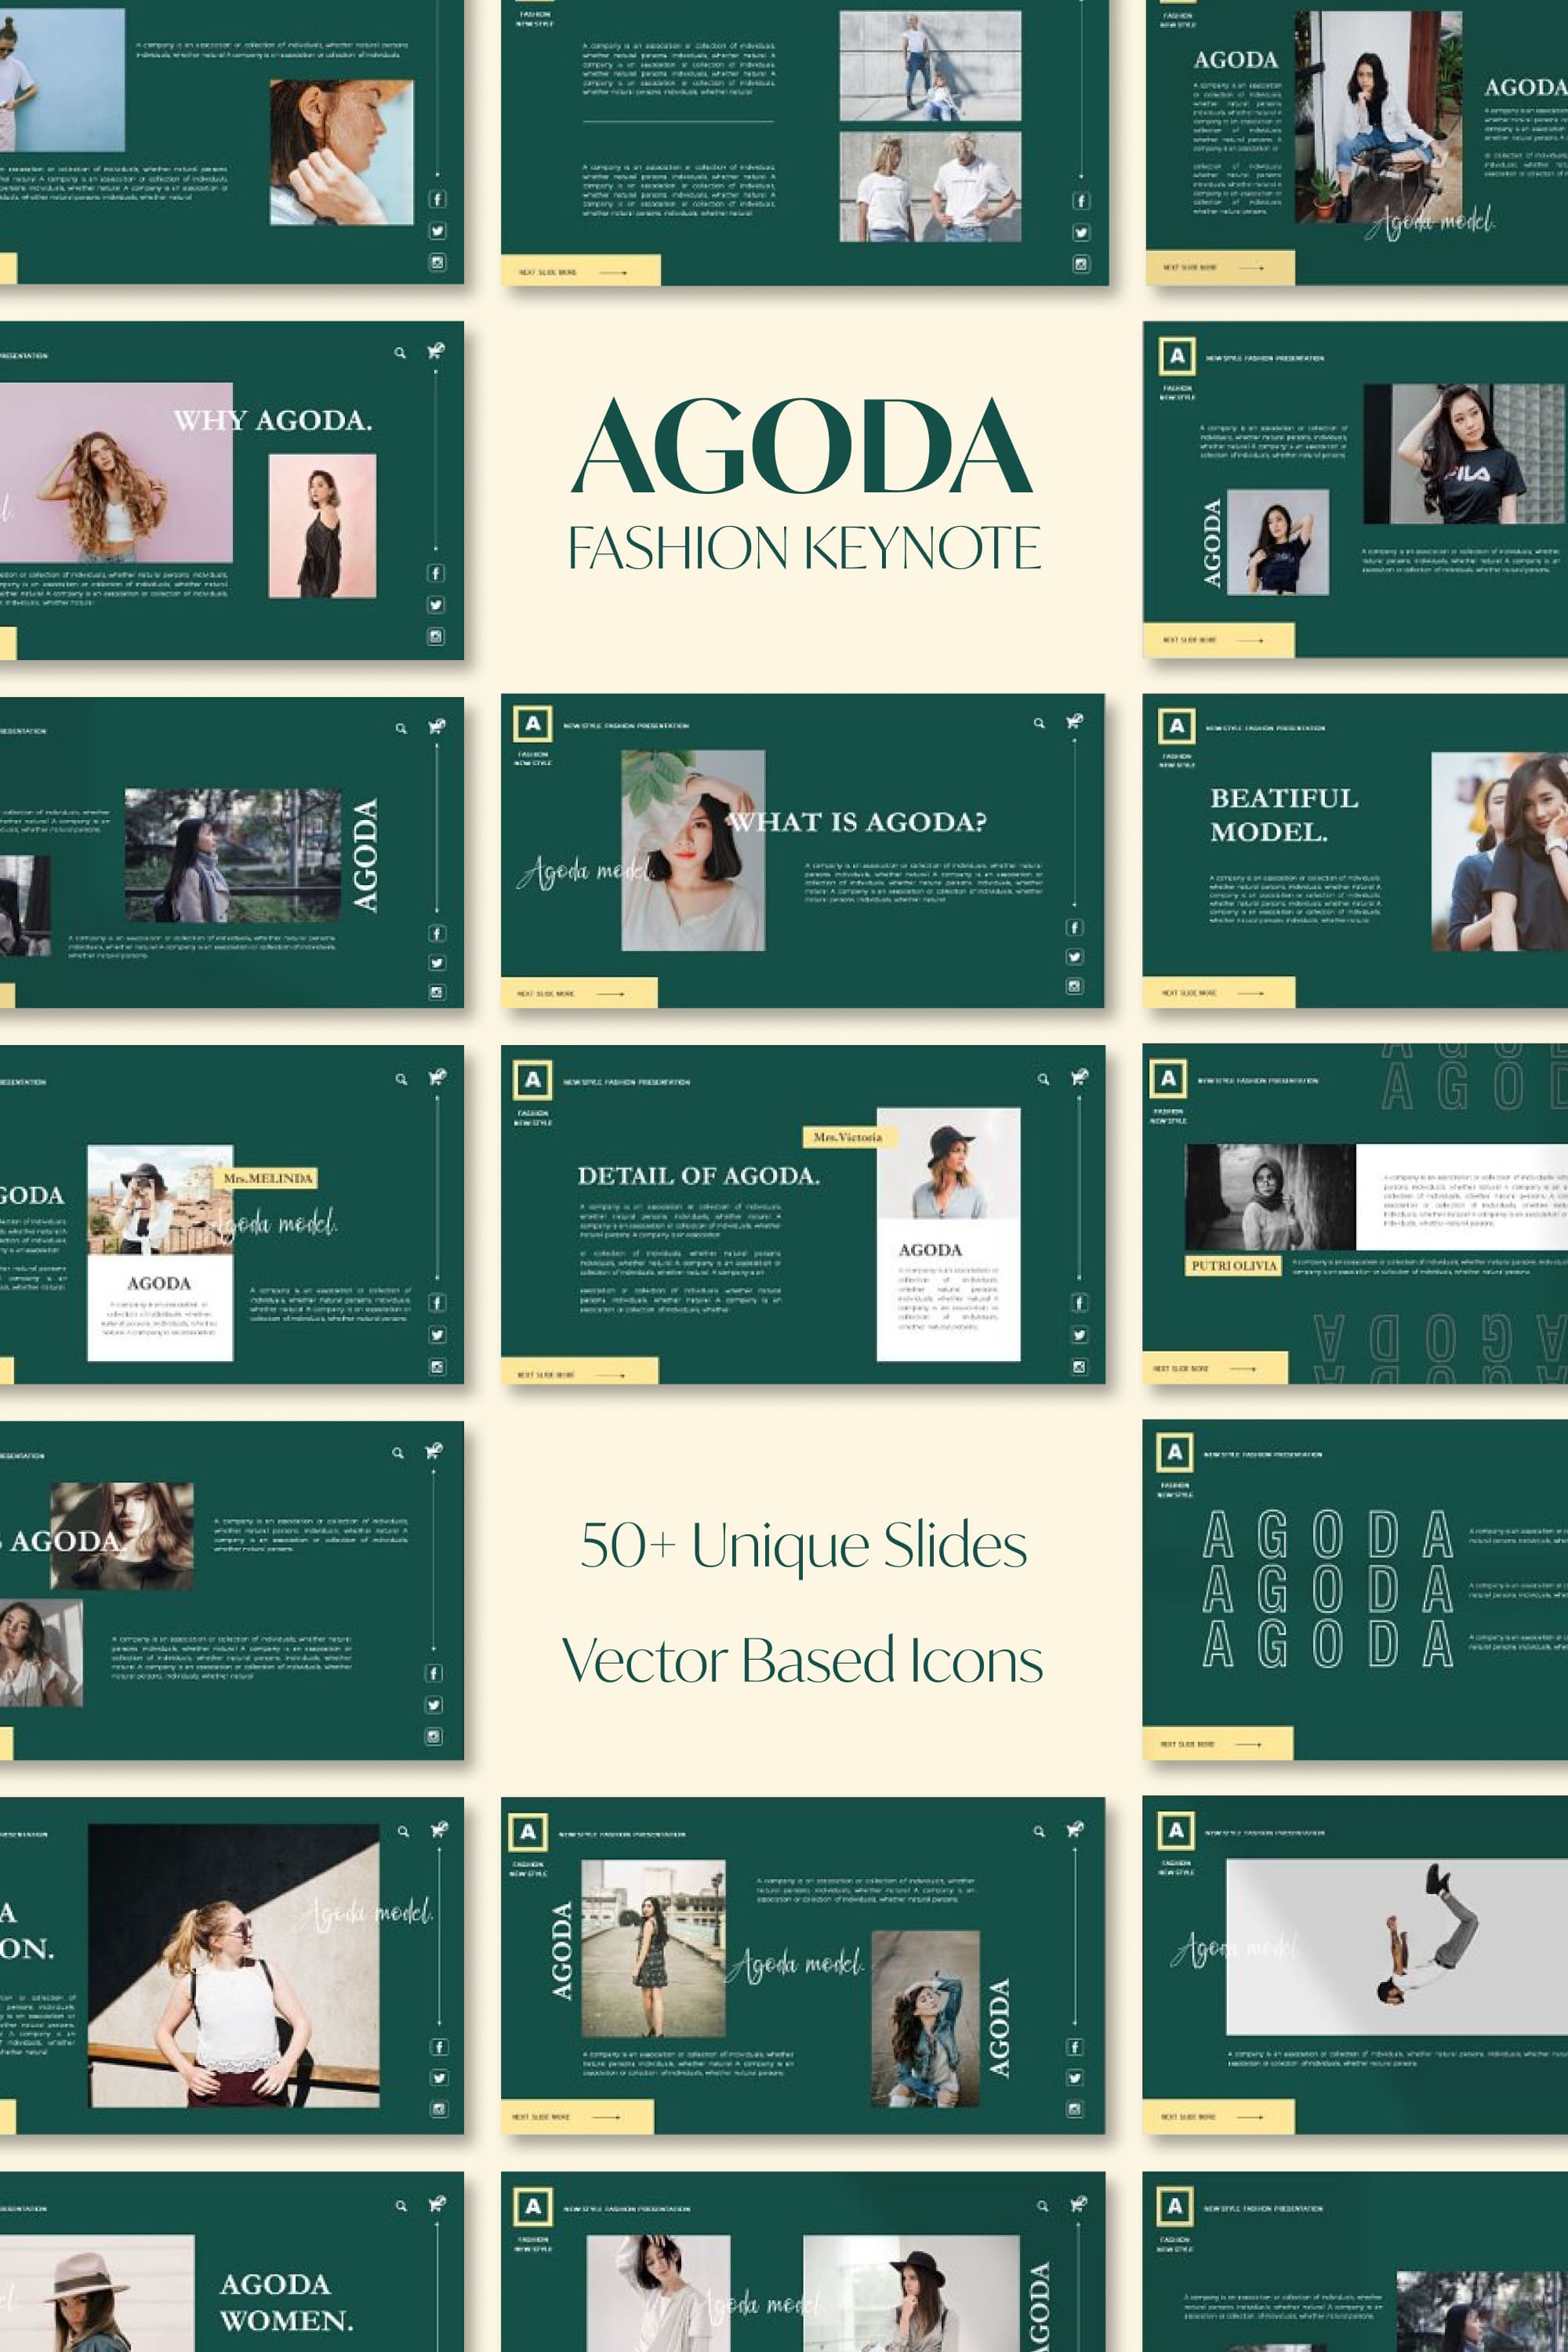 Agoda fashion keynote - pinterest image preview.